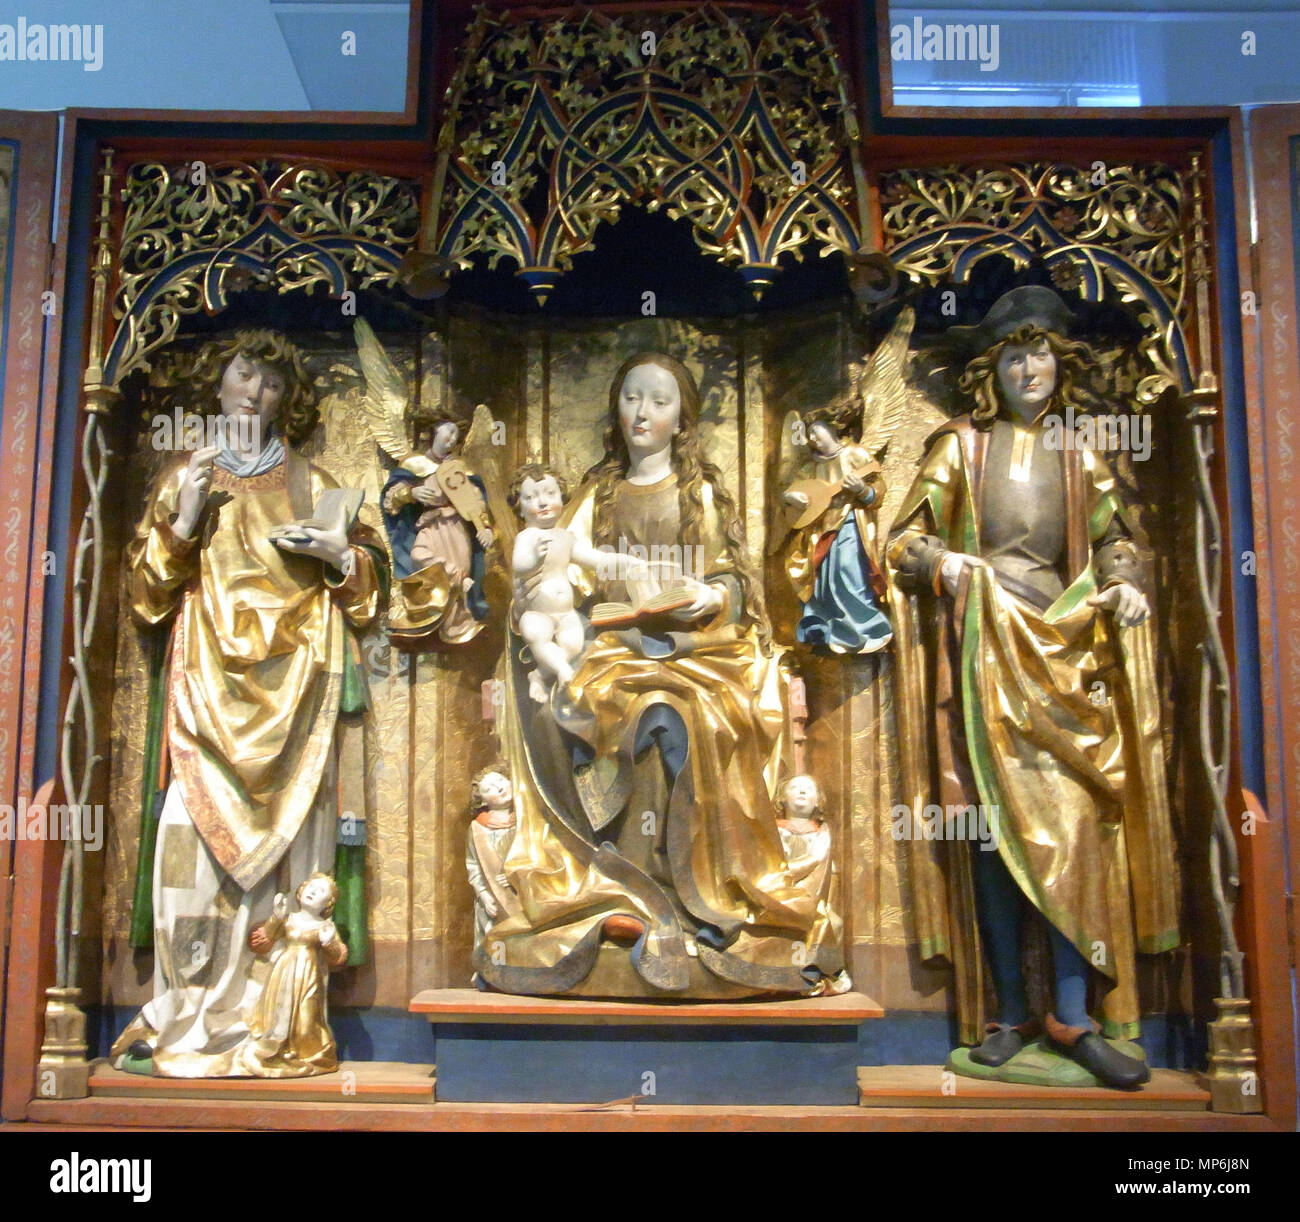 Exif JPEG-Bild 791 Landesmuseum Württemberg-Talheimer Altar -0231364 Stockfoto